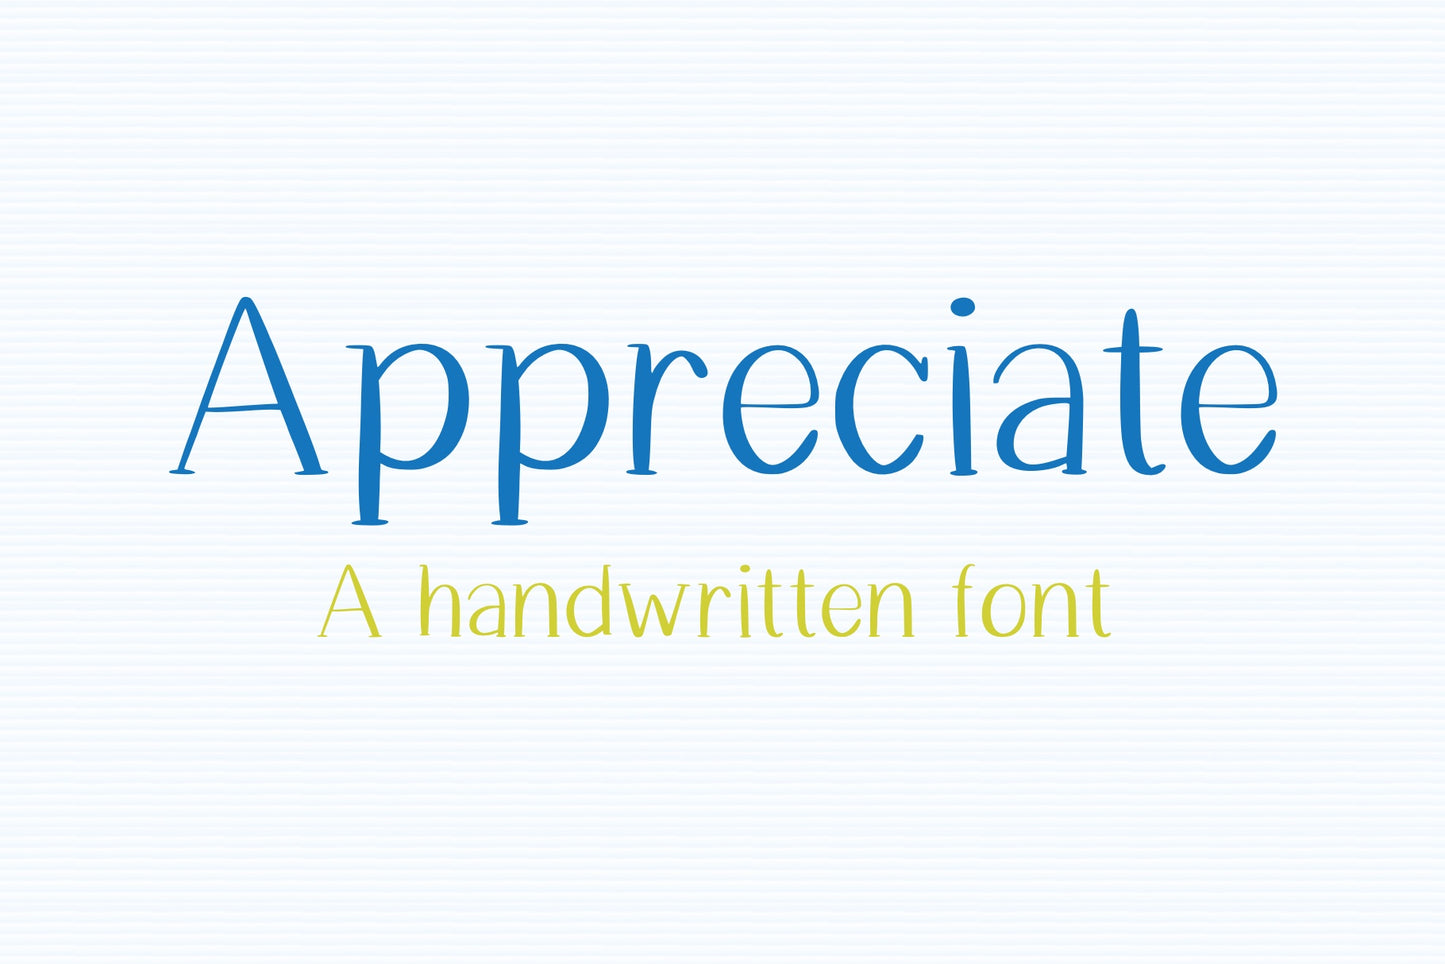 Handwritten Font - Appreciate